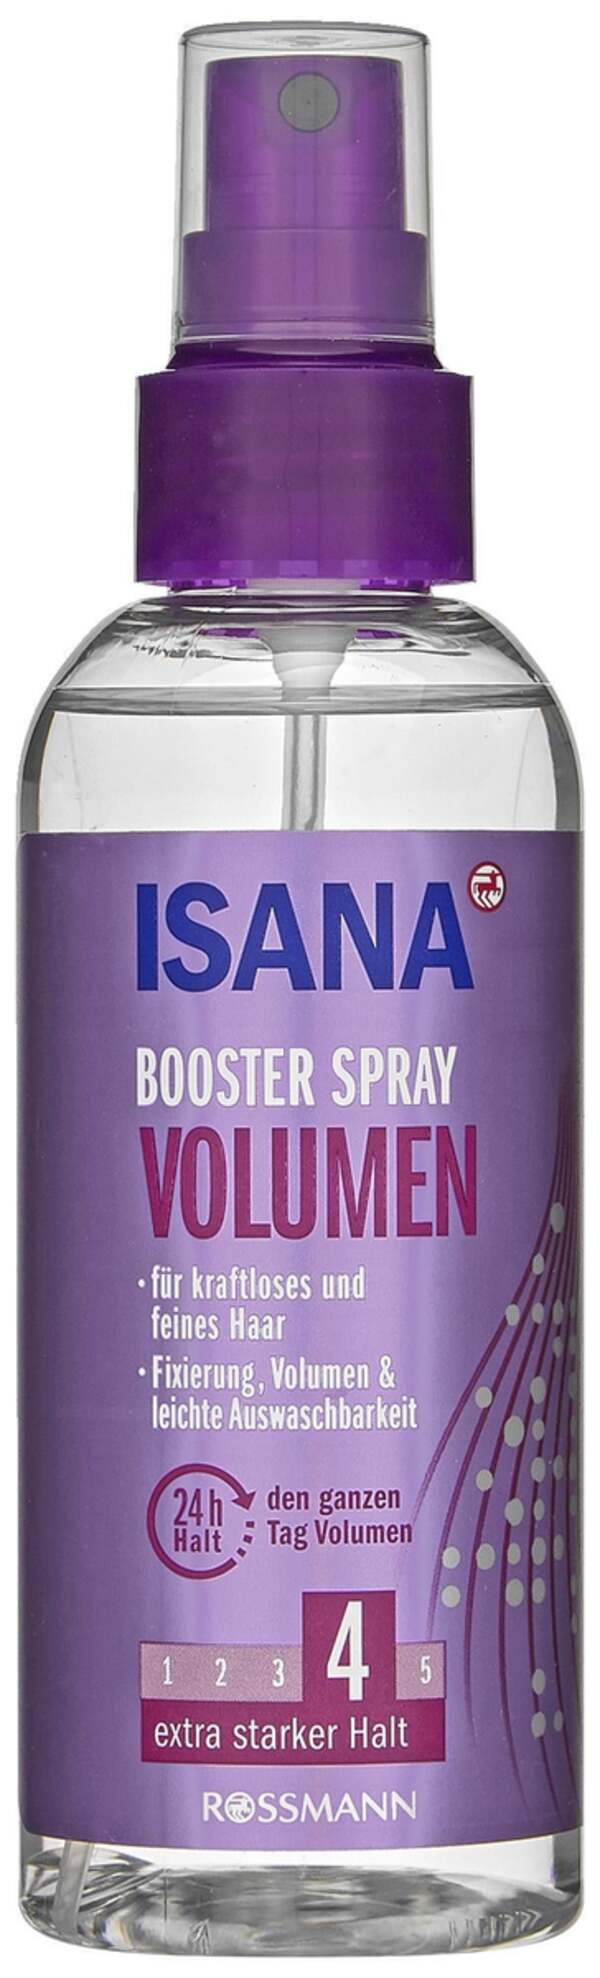 Isana Booster Spray Volumen